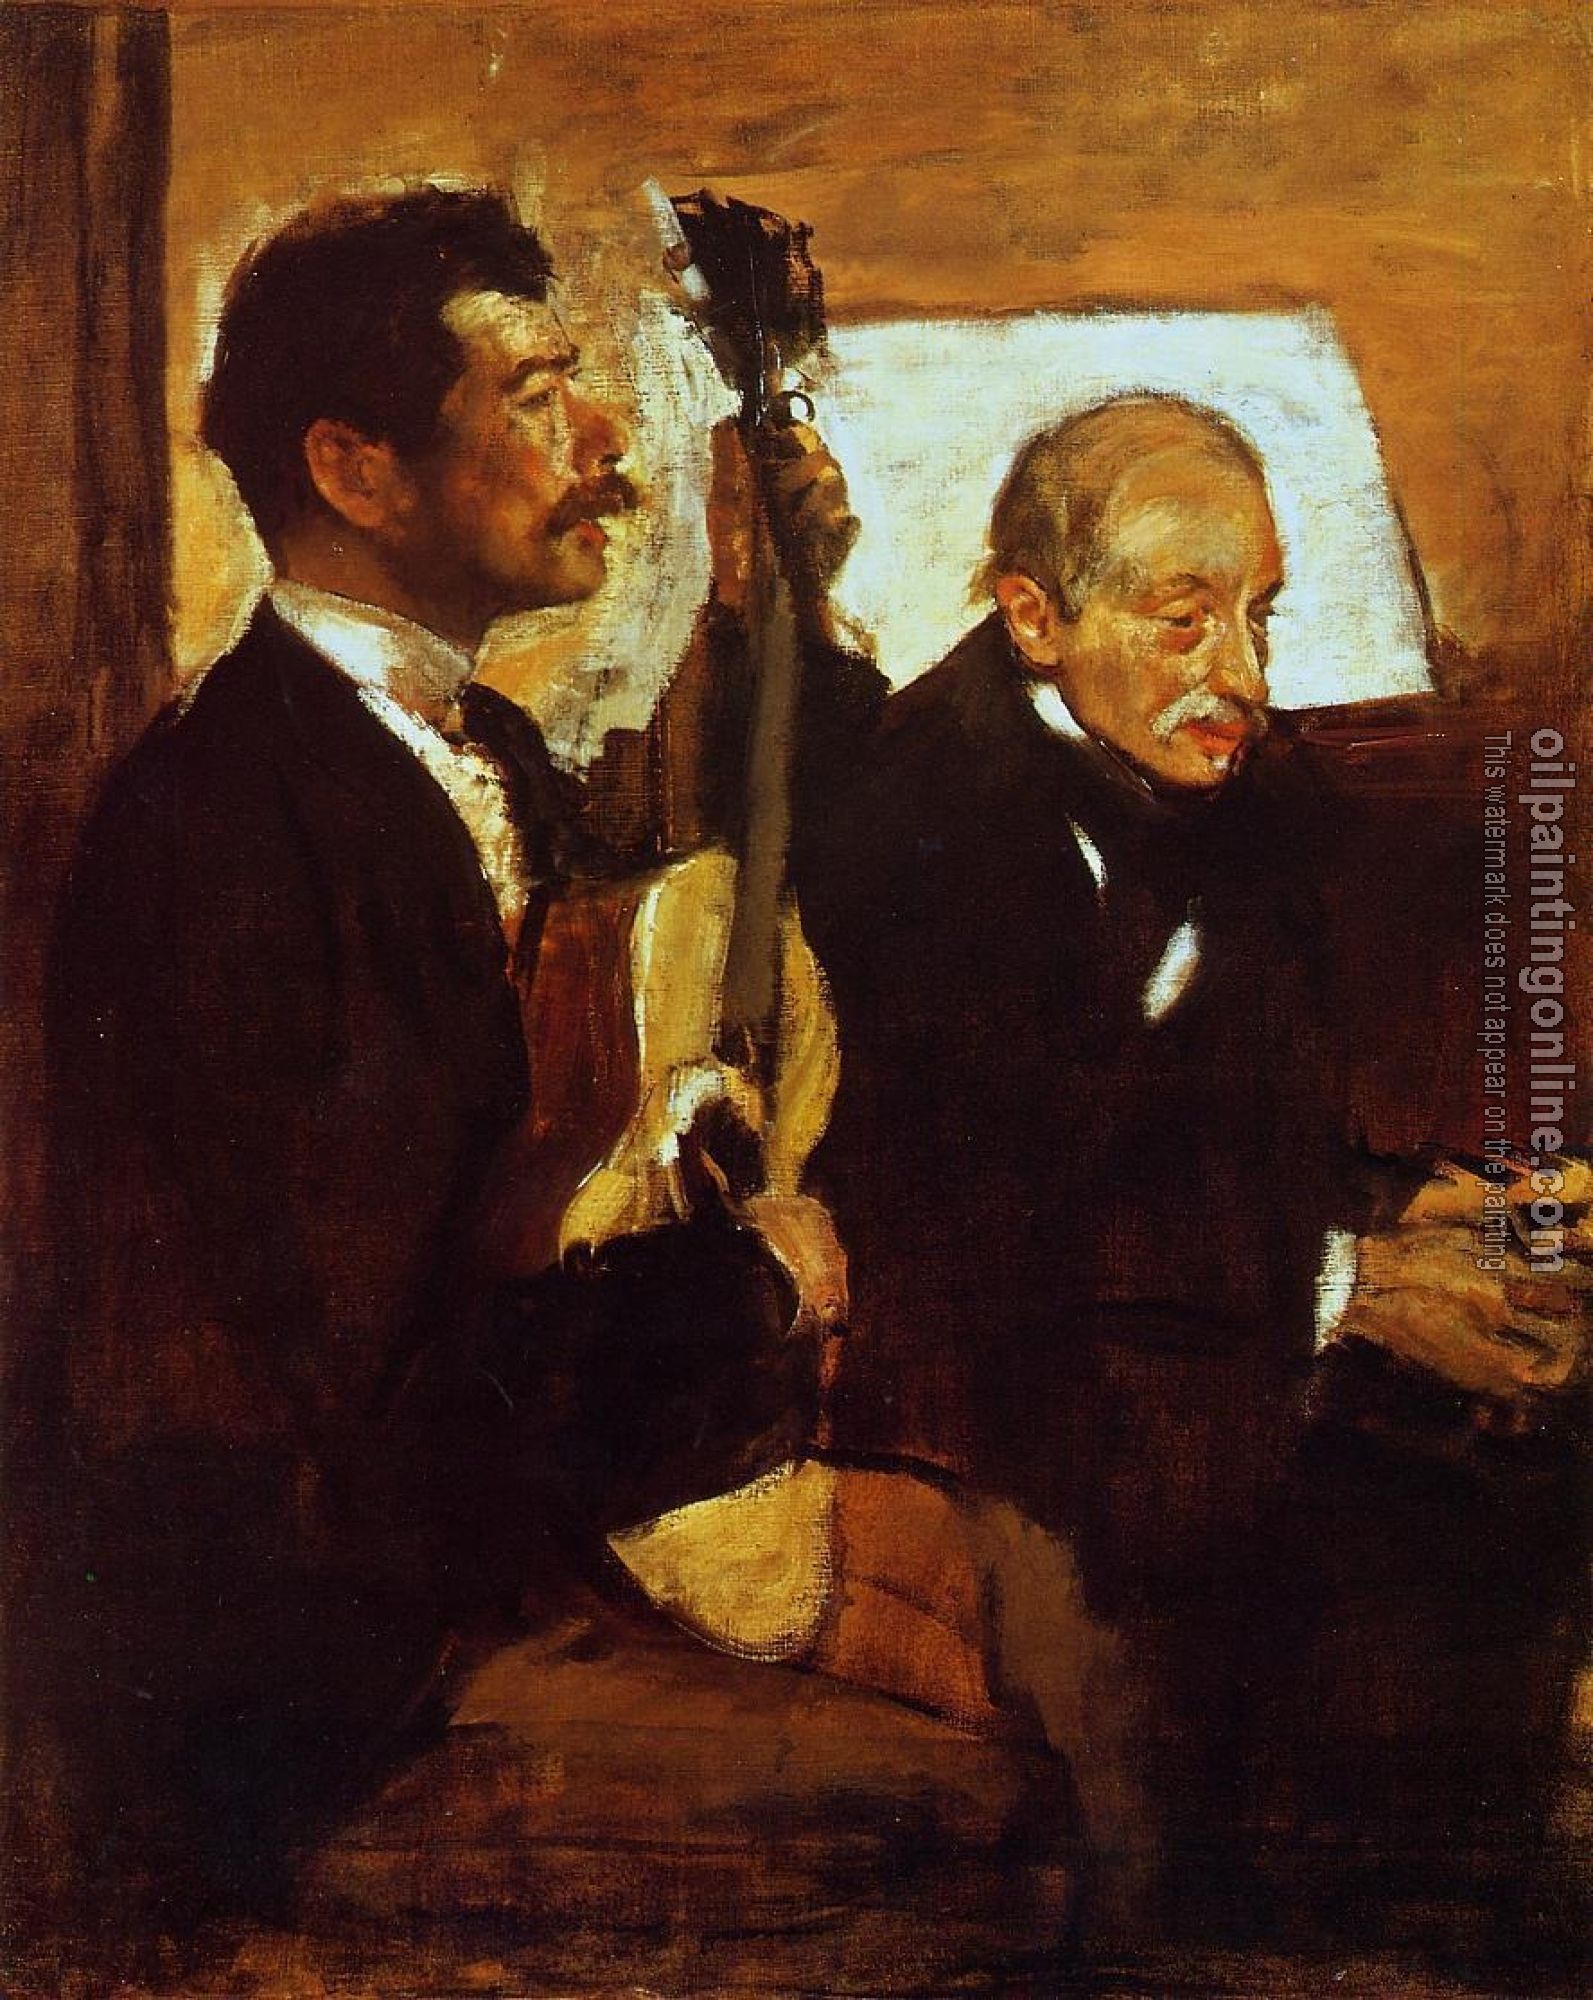 Degas, Edgar - Degas' Father Listening to Lorenzo Pagans